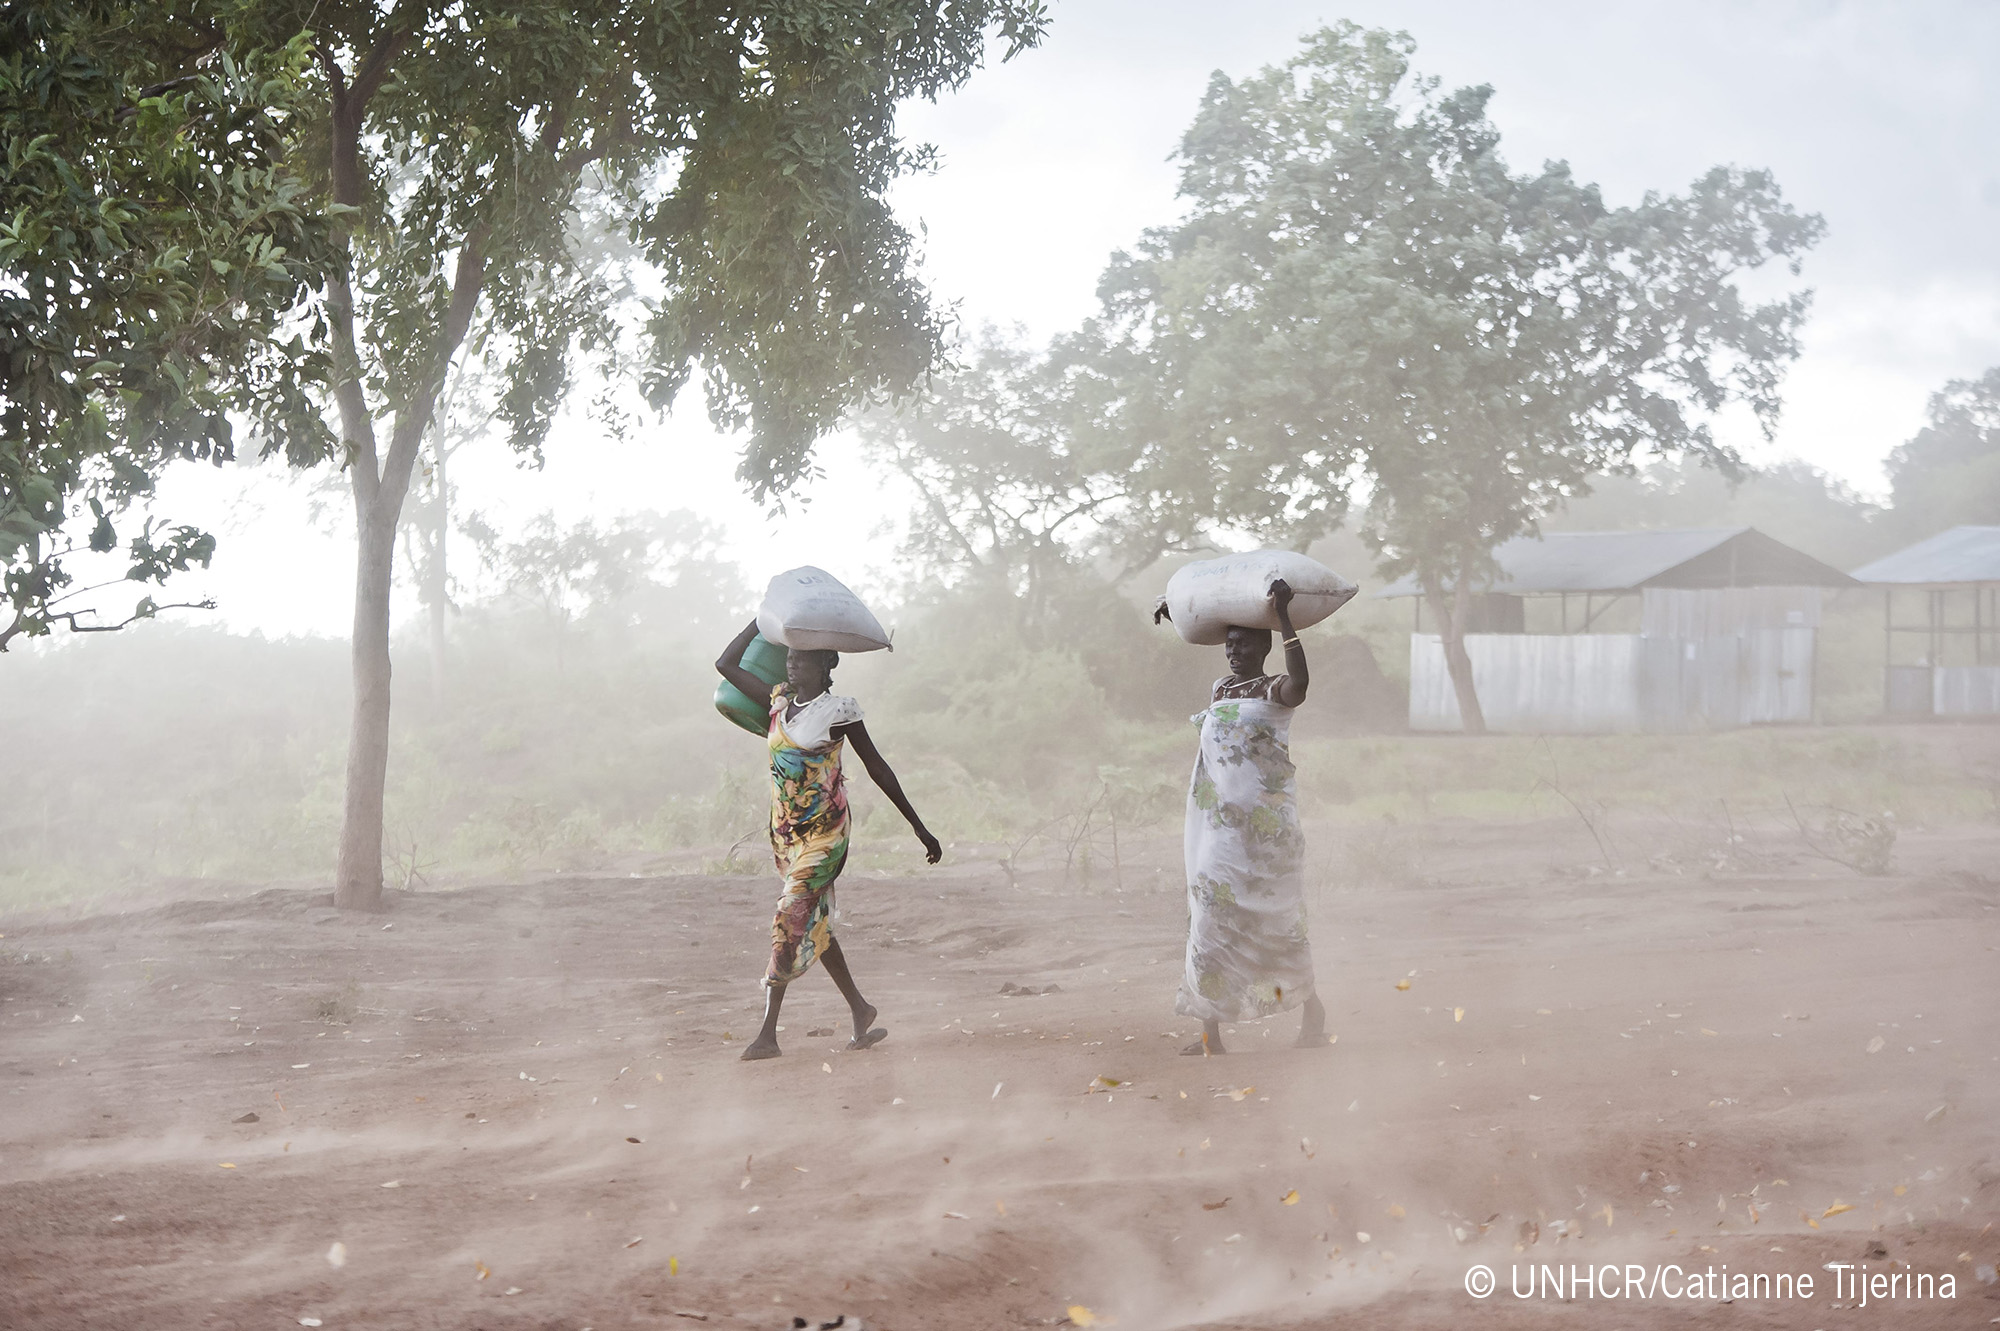 South Sudanese women rush through the rain at the Kule Refugee Camp in the Gambella Region of Ethiopia near the border. © UNHCR/Catianne Tijerina 2014